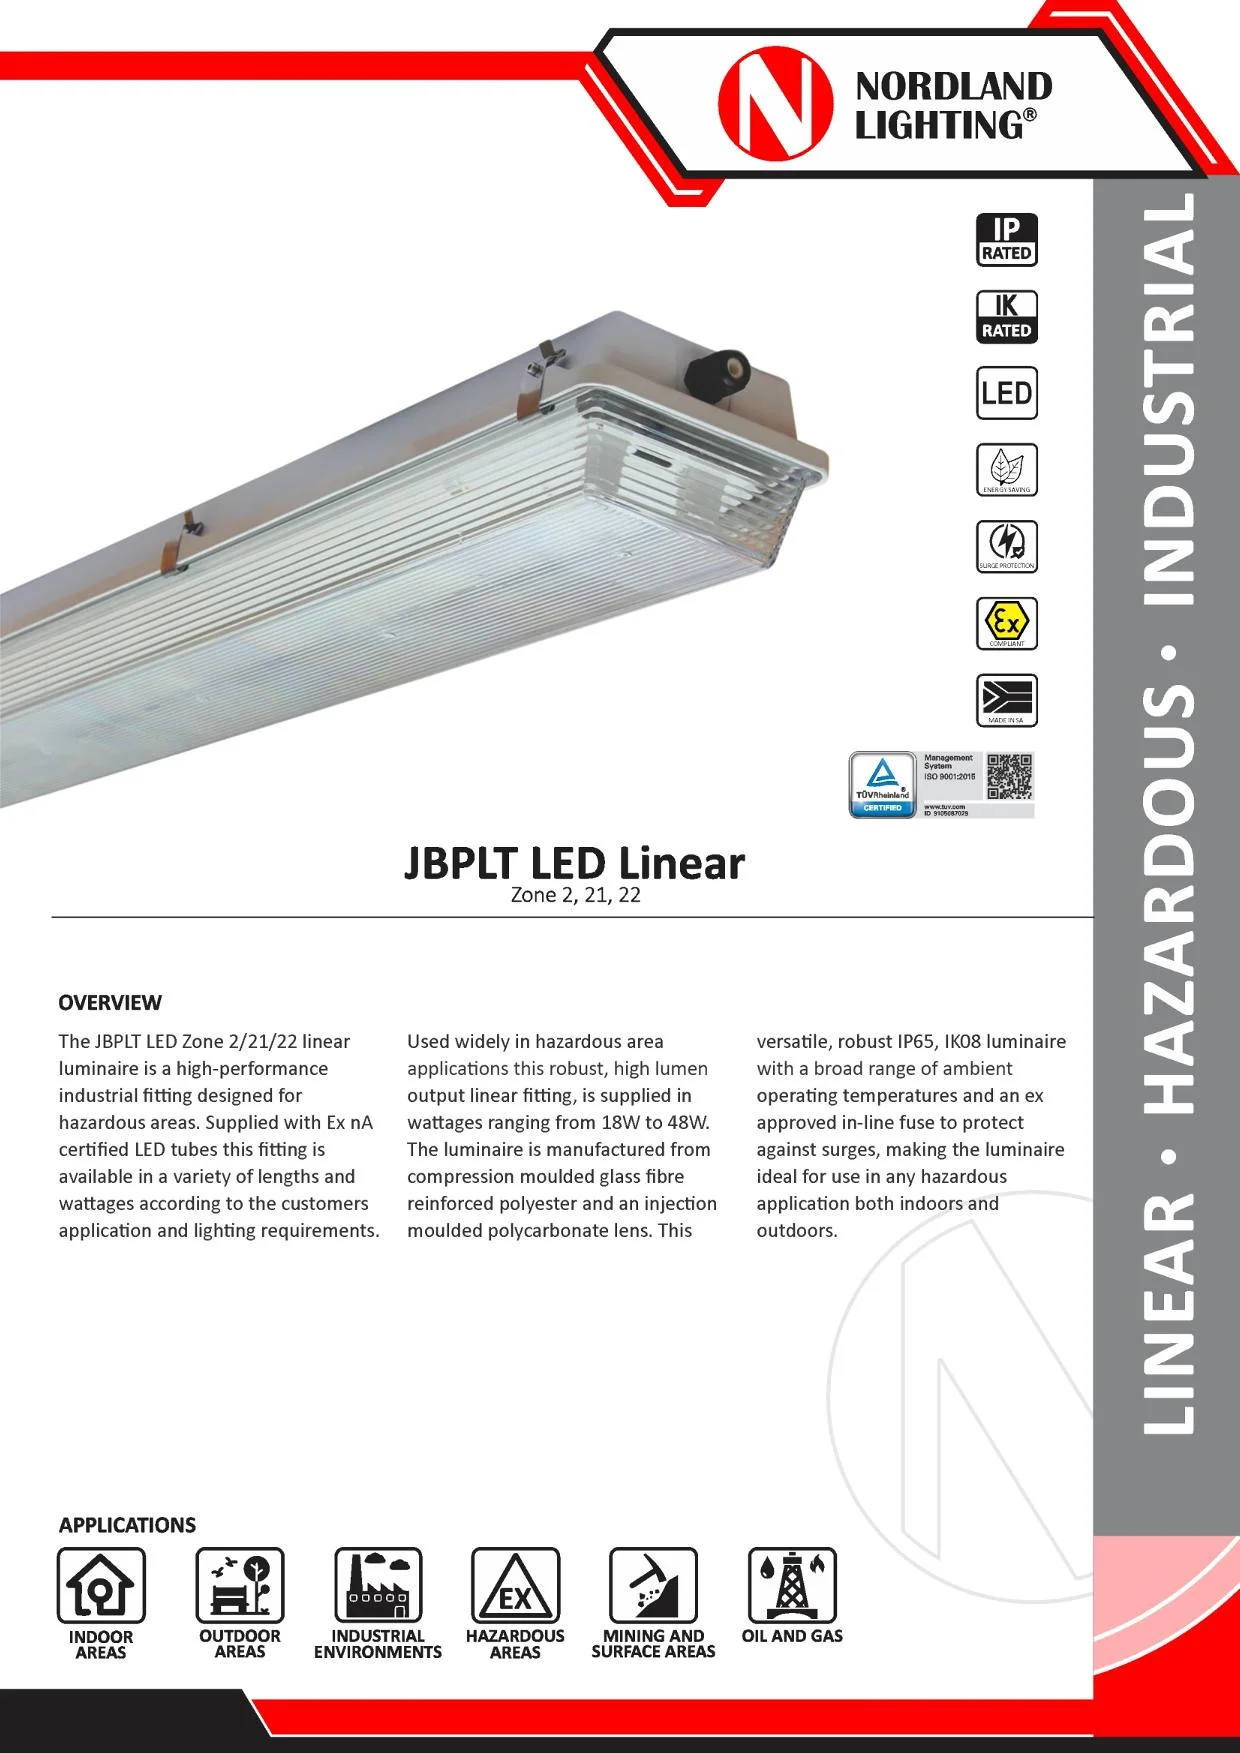 NL23 Nordland  JBPLT LED Exn LED Linear Luminaire